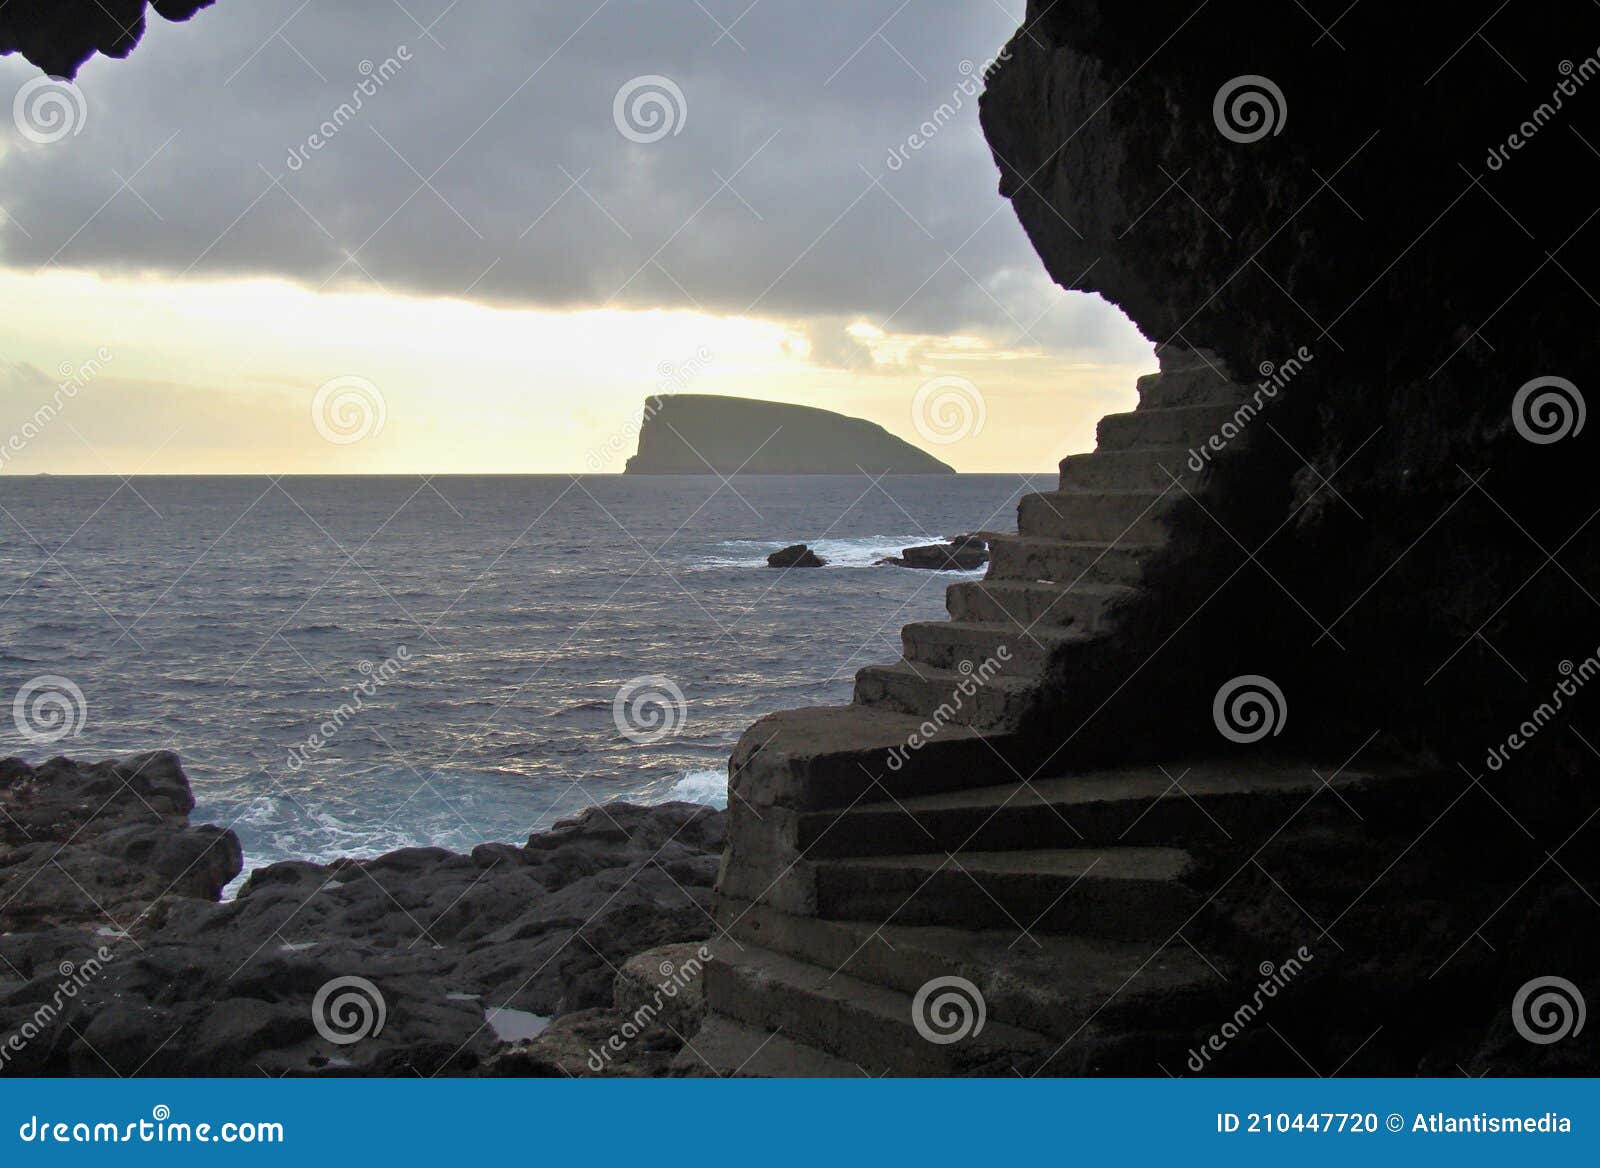 atlantic coast on the acores islands - portugal